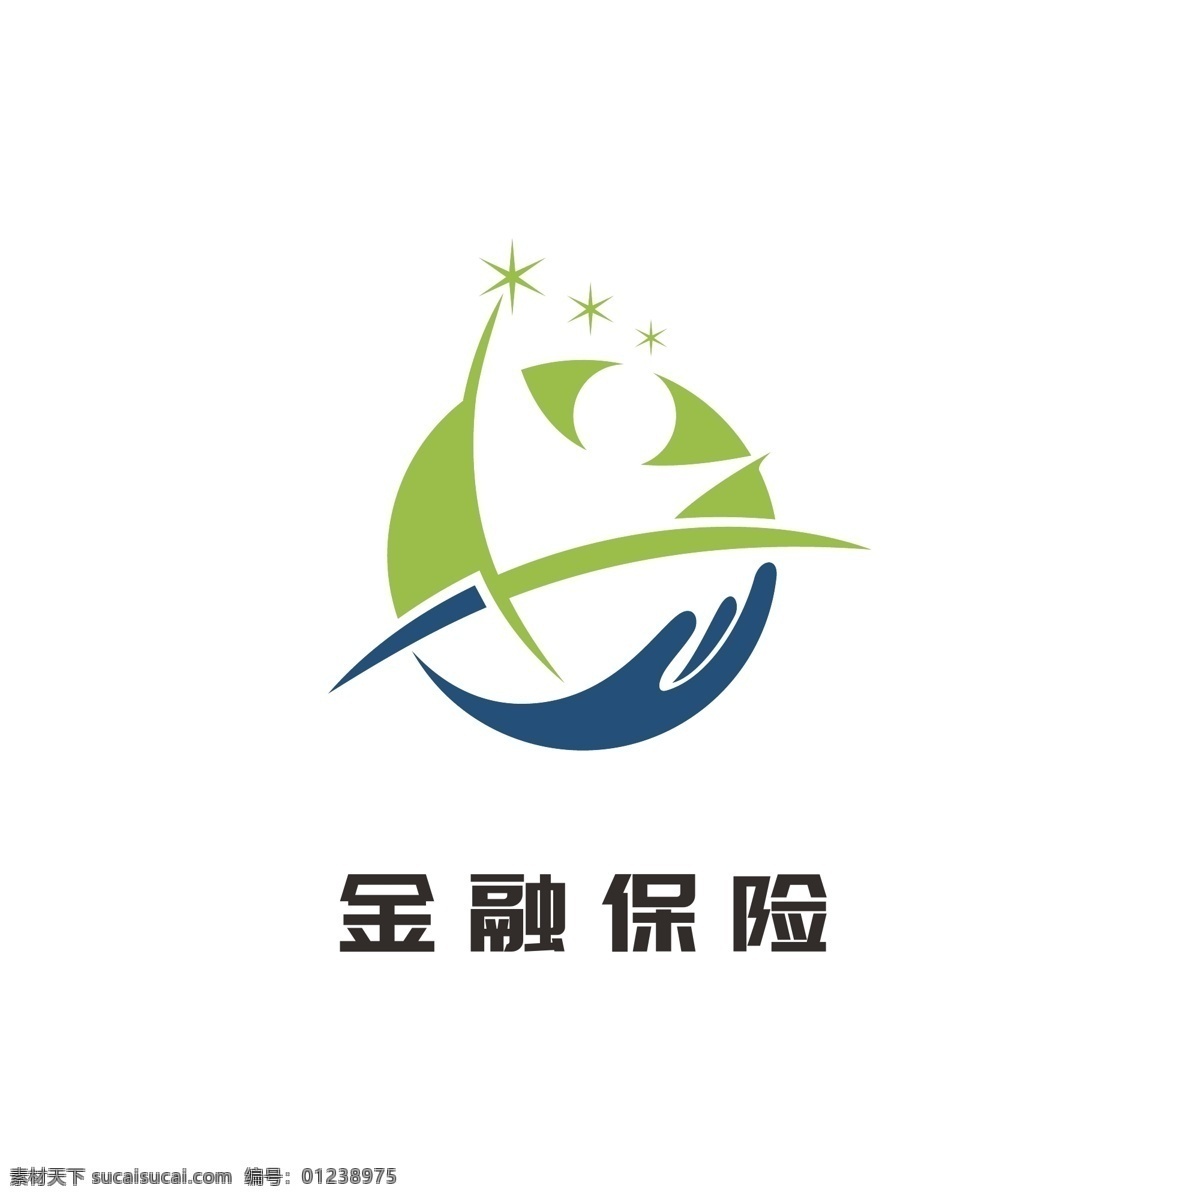 金融保险 logo 通用 矢量 大众 标志 金融logo 保险logo 矢量logo 通用logo 大众logo